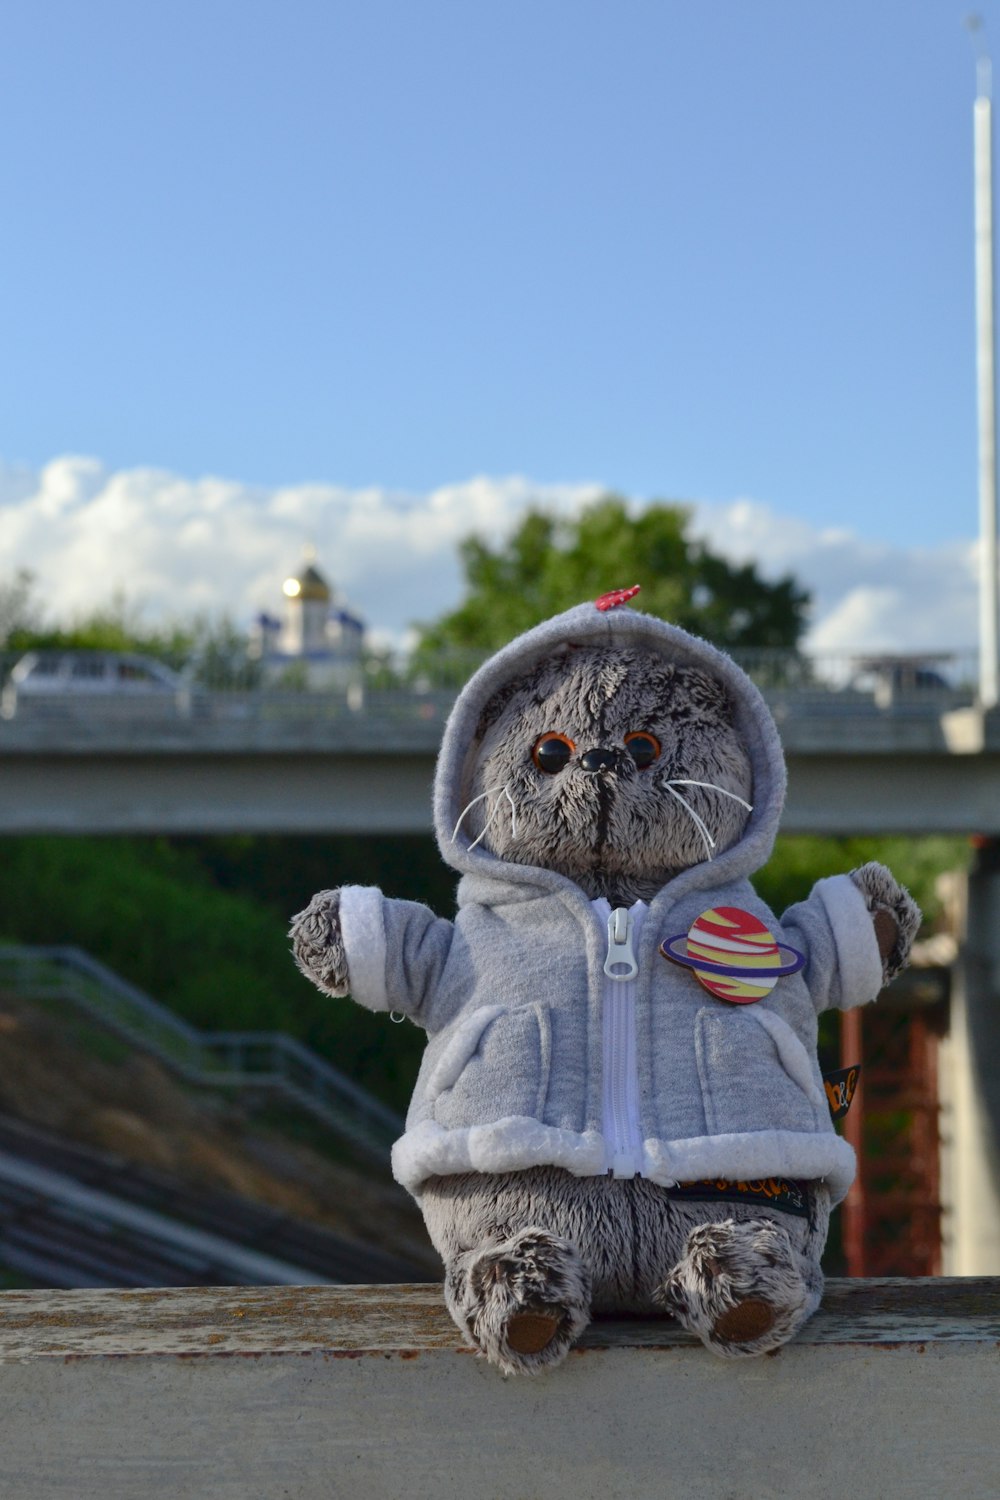 a stuffed animal is sitting on a ledge